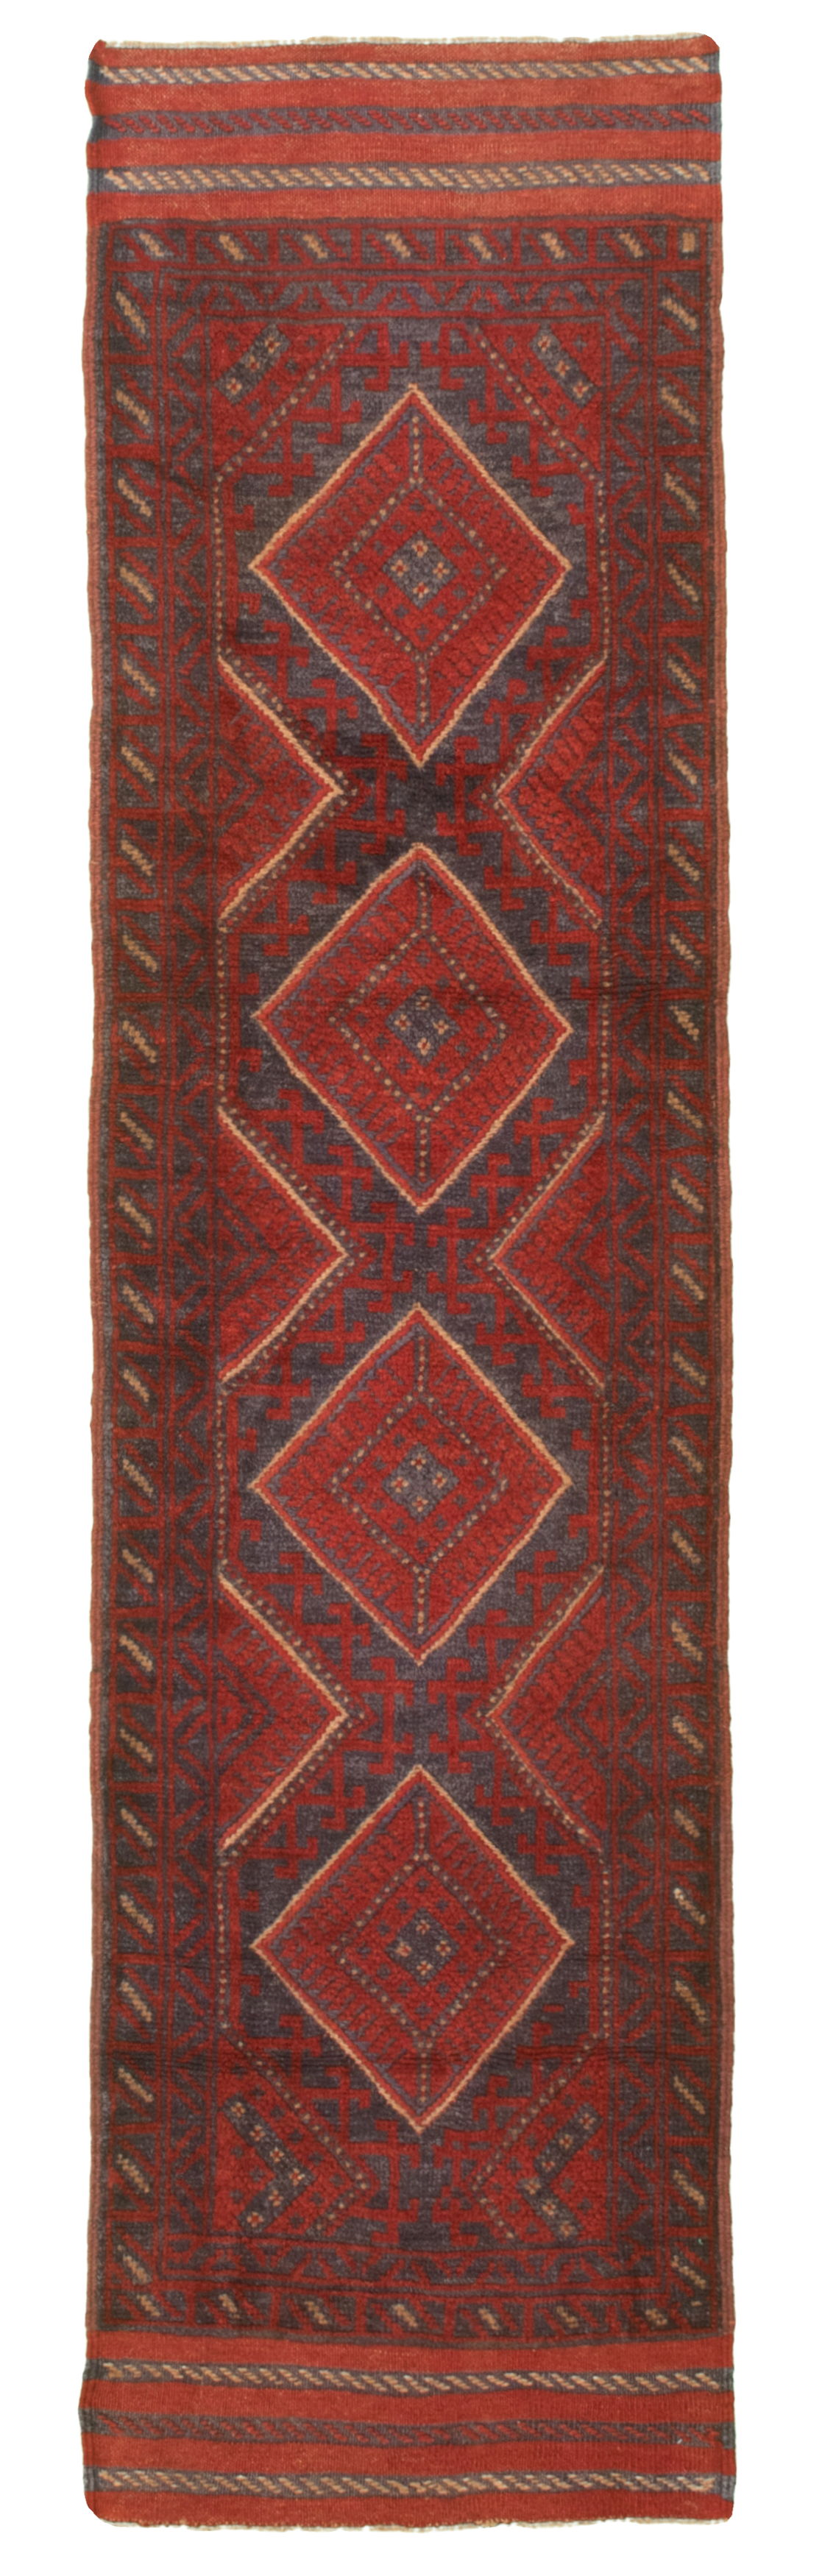 Hand-knotted Tajik Caucasian Red Wool Rug 2'1" x 8'0"  Size: 2'1" x 8'0"  